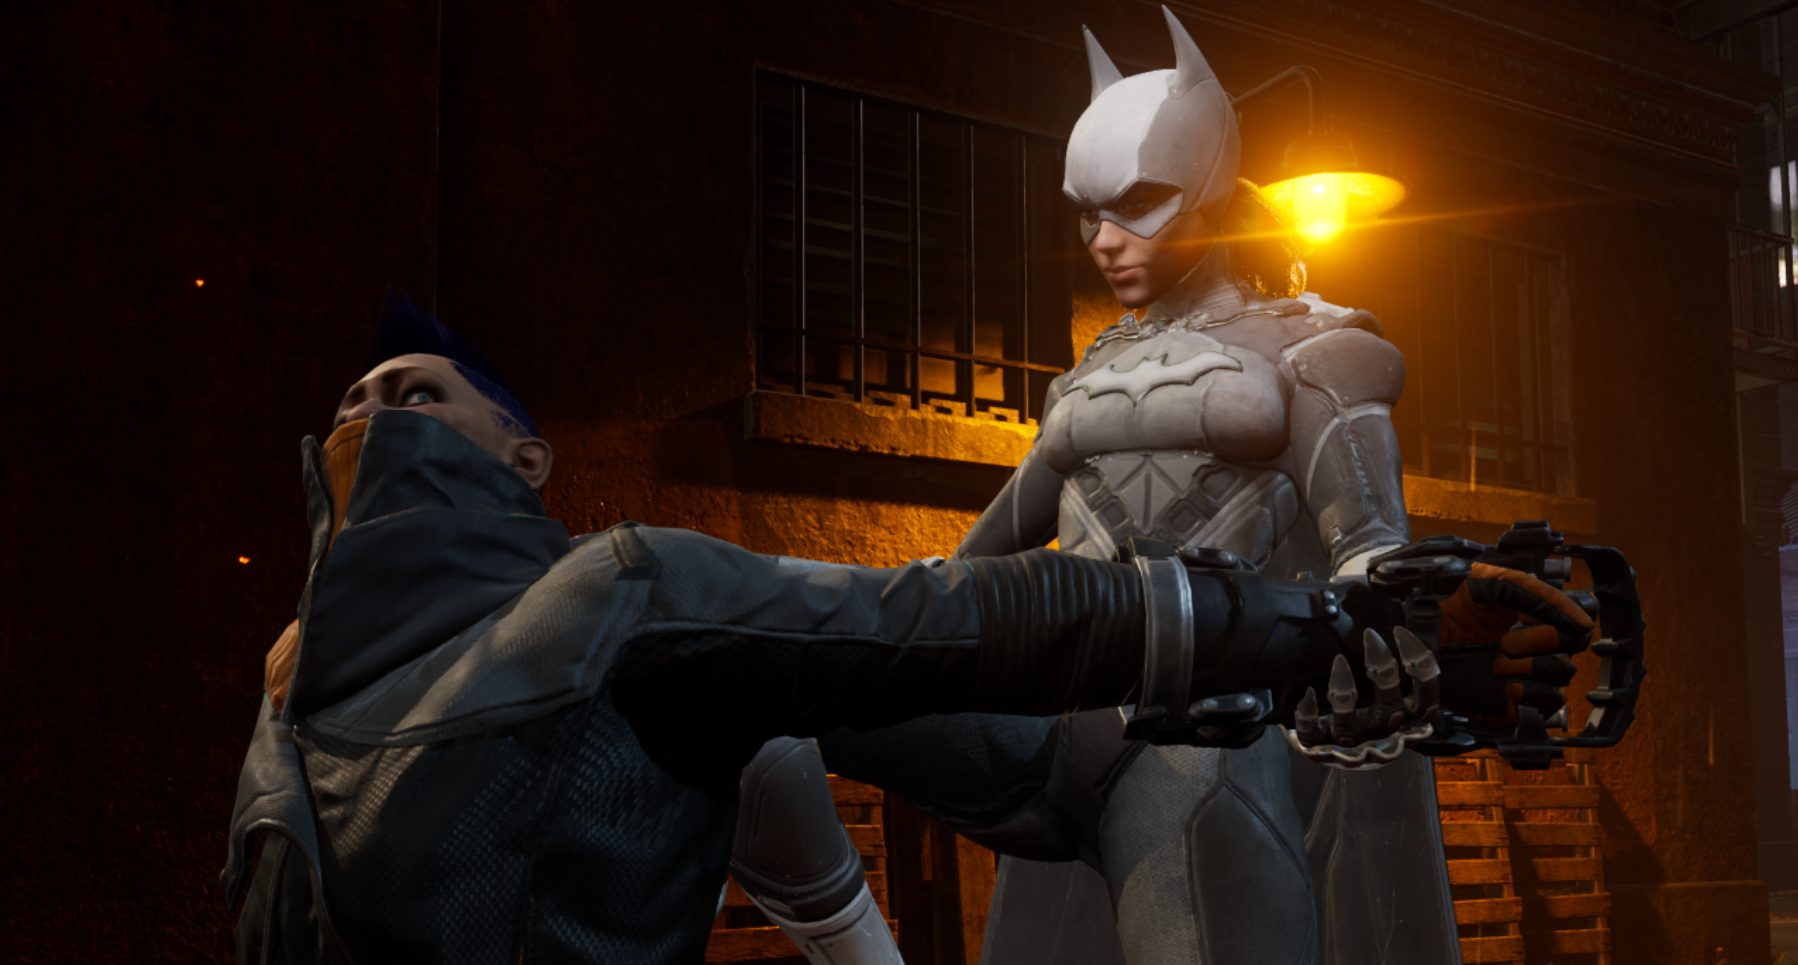 These Sifu mods make The Batman 2022 game we need